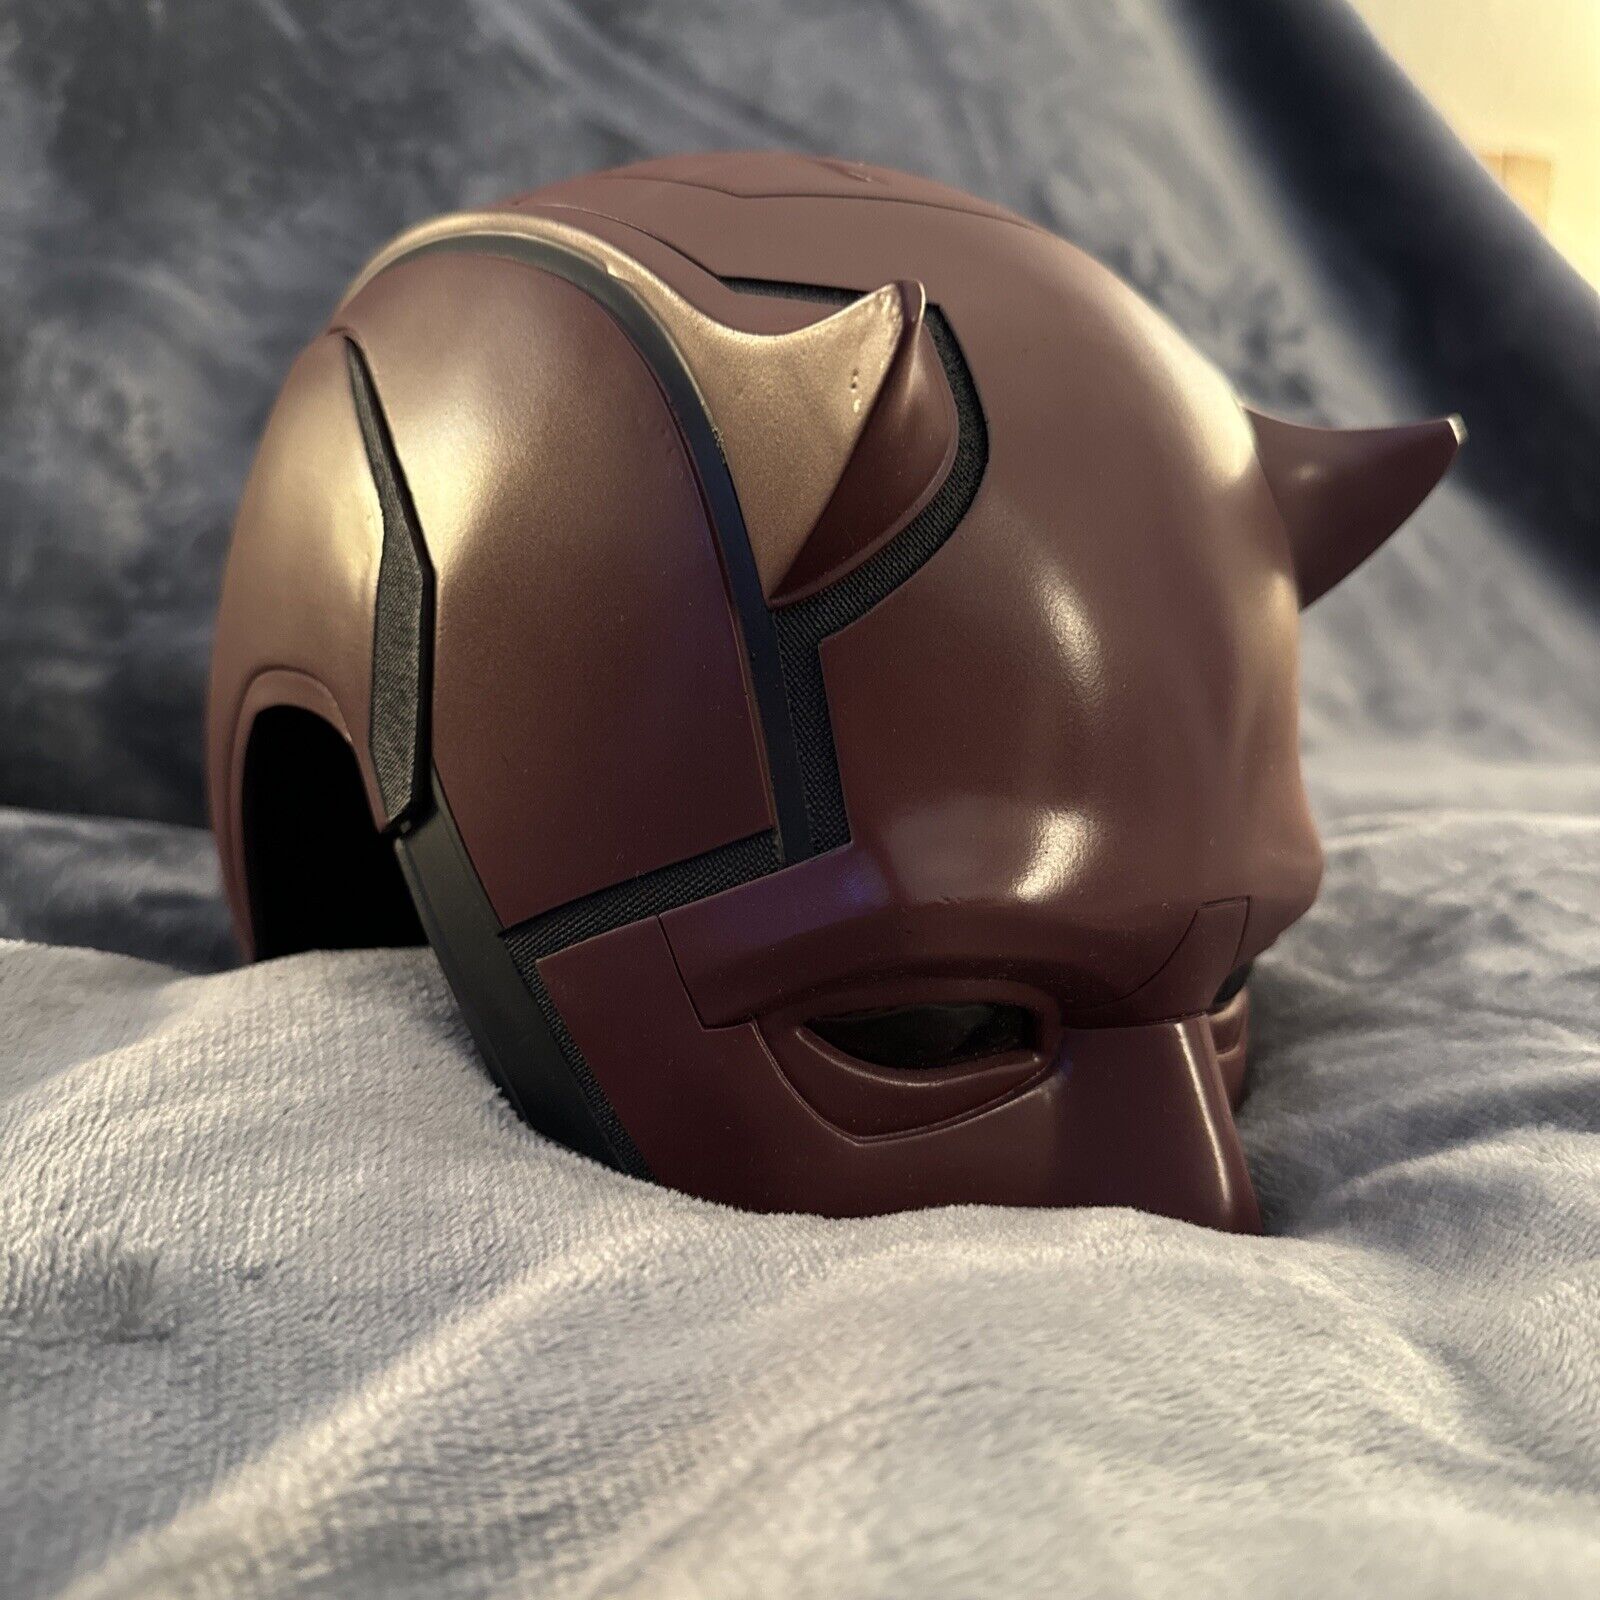 3D Printed Netflix Daredevil Helmet - SCREEN ACCURATE